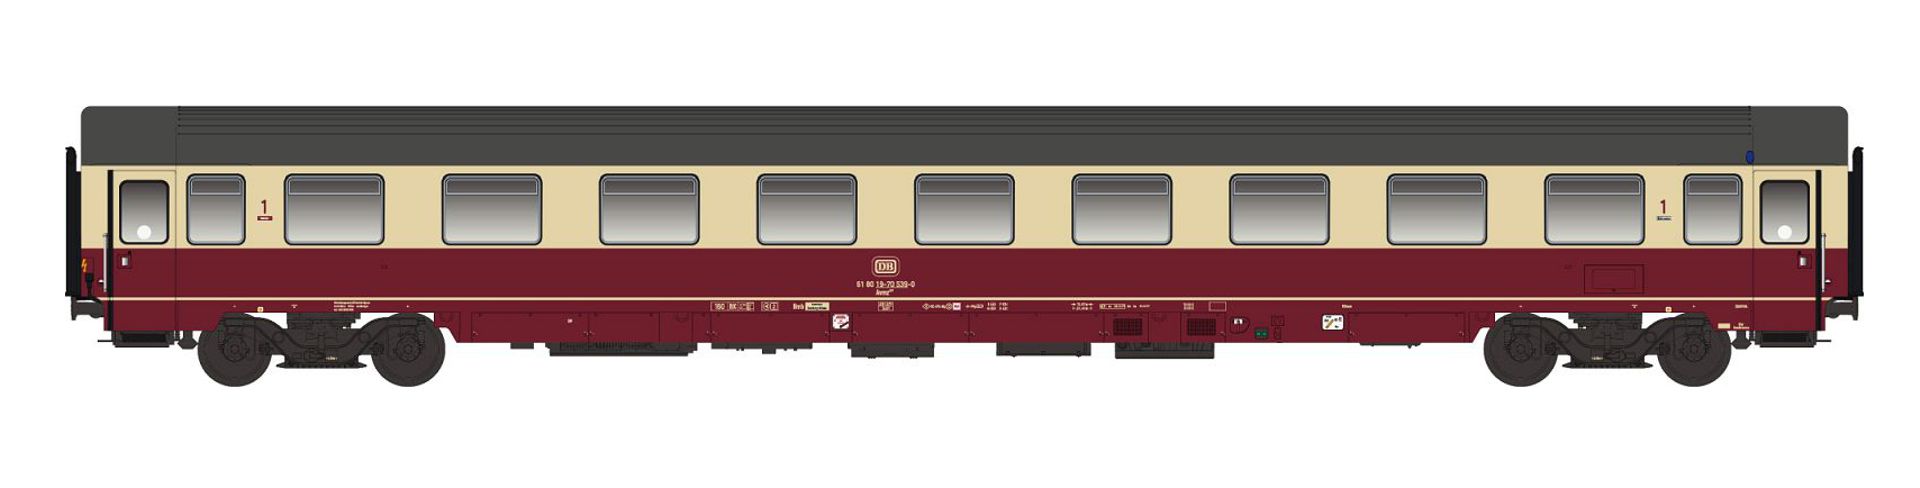 L.S. Models 46174 - Personenwagen Avmz 207, 1.Klasse, DB, Ep.IV